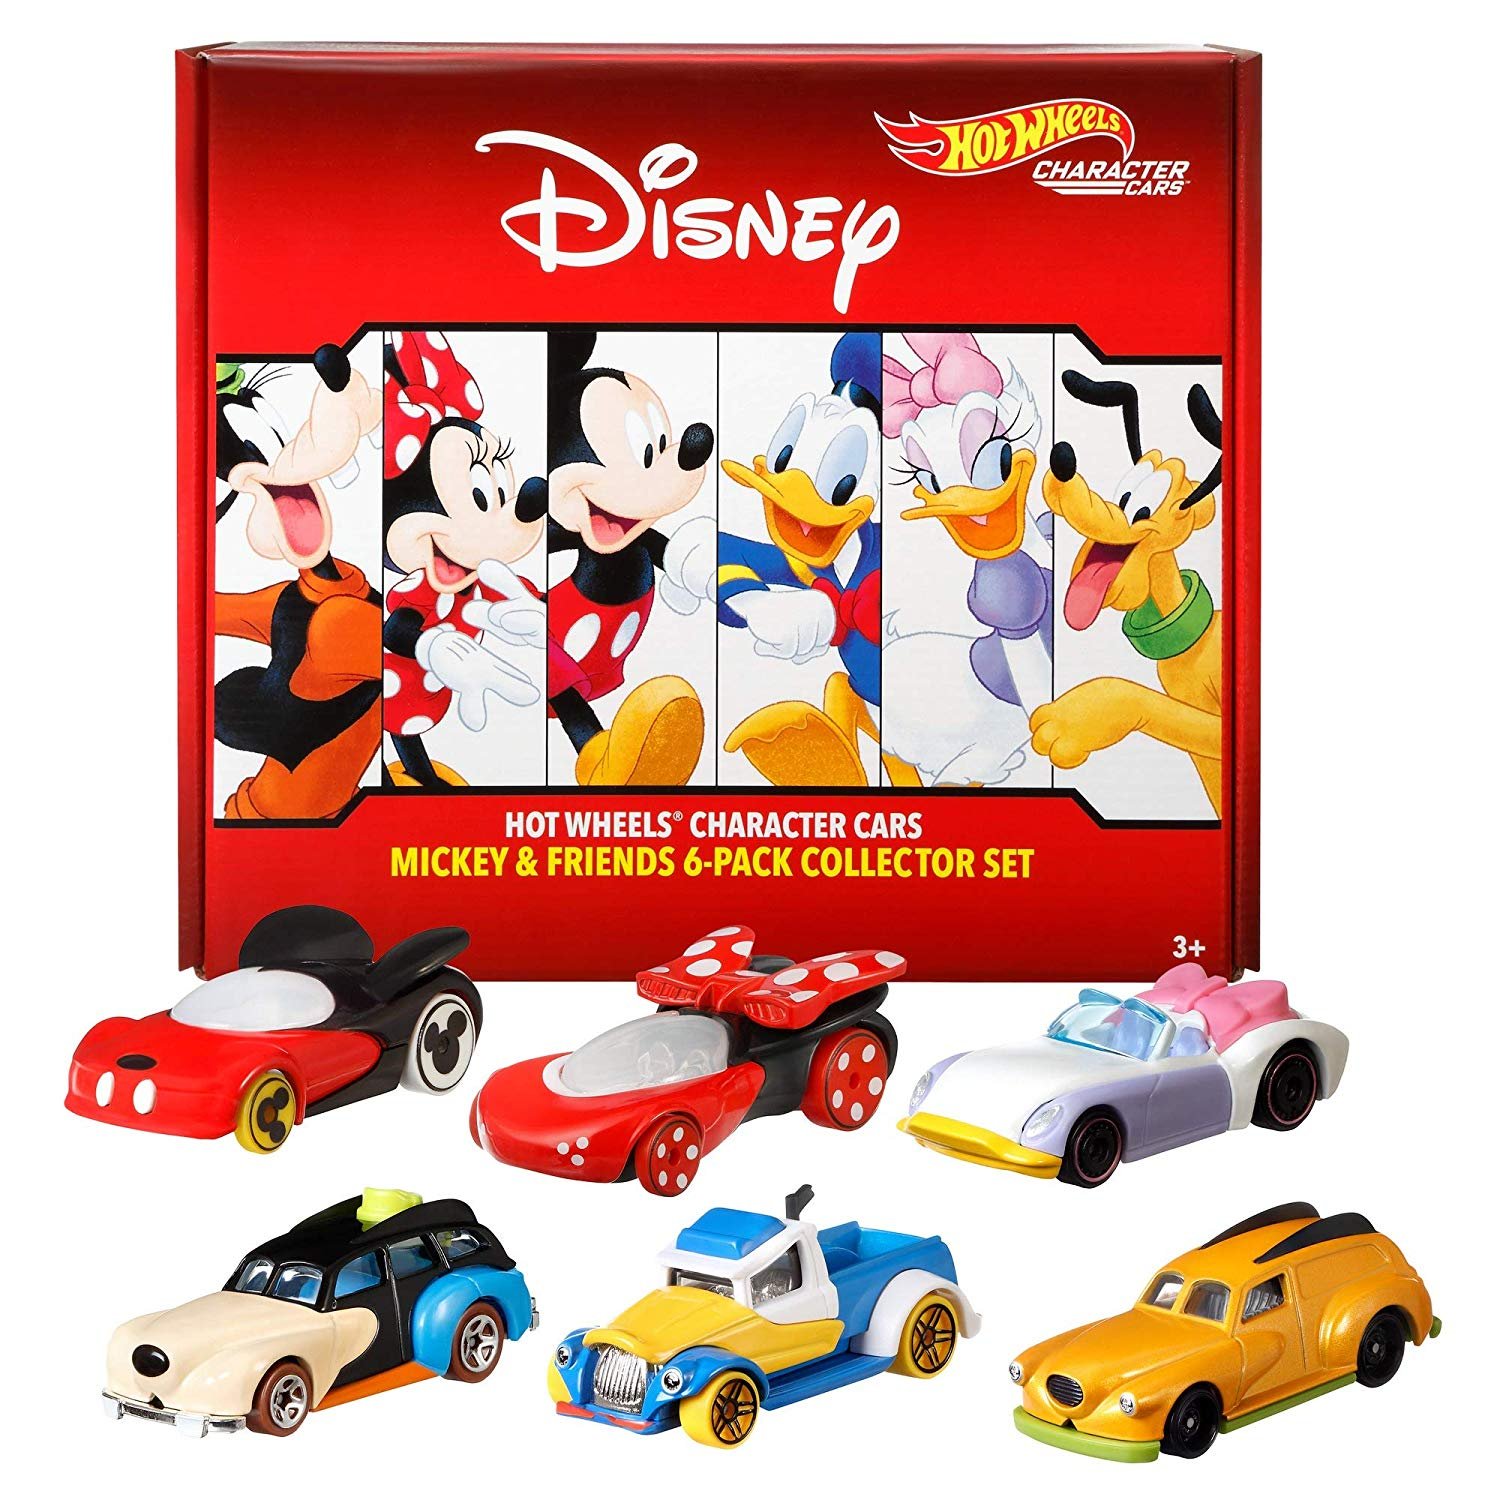 “Hot Wheels Disney Bundle Vehicles [Amazon Exclusive] on Amazon-https://t.c...